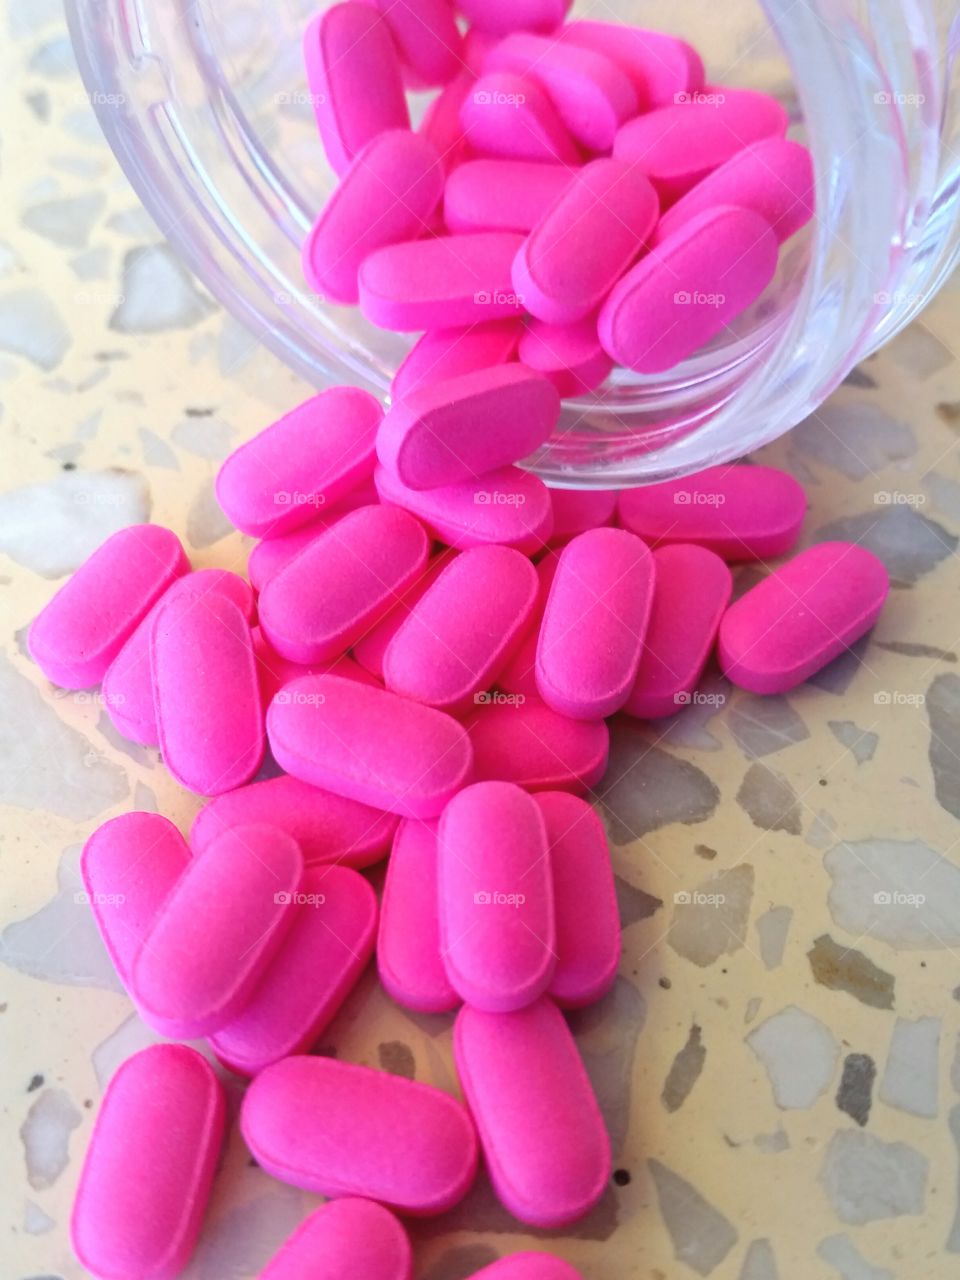 Pink pills tumbling out of jar